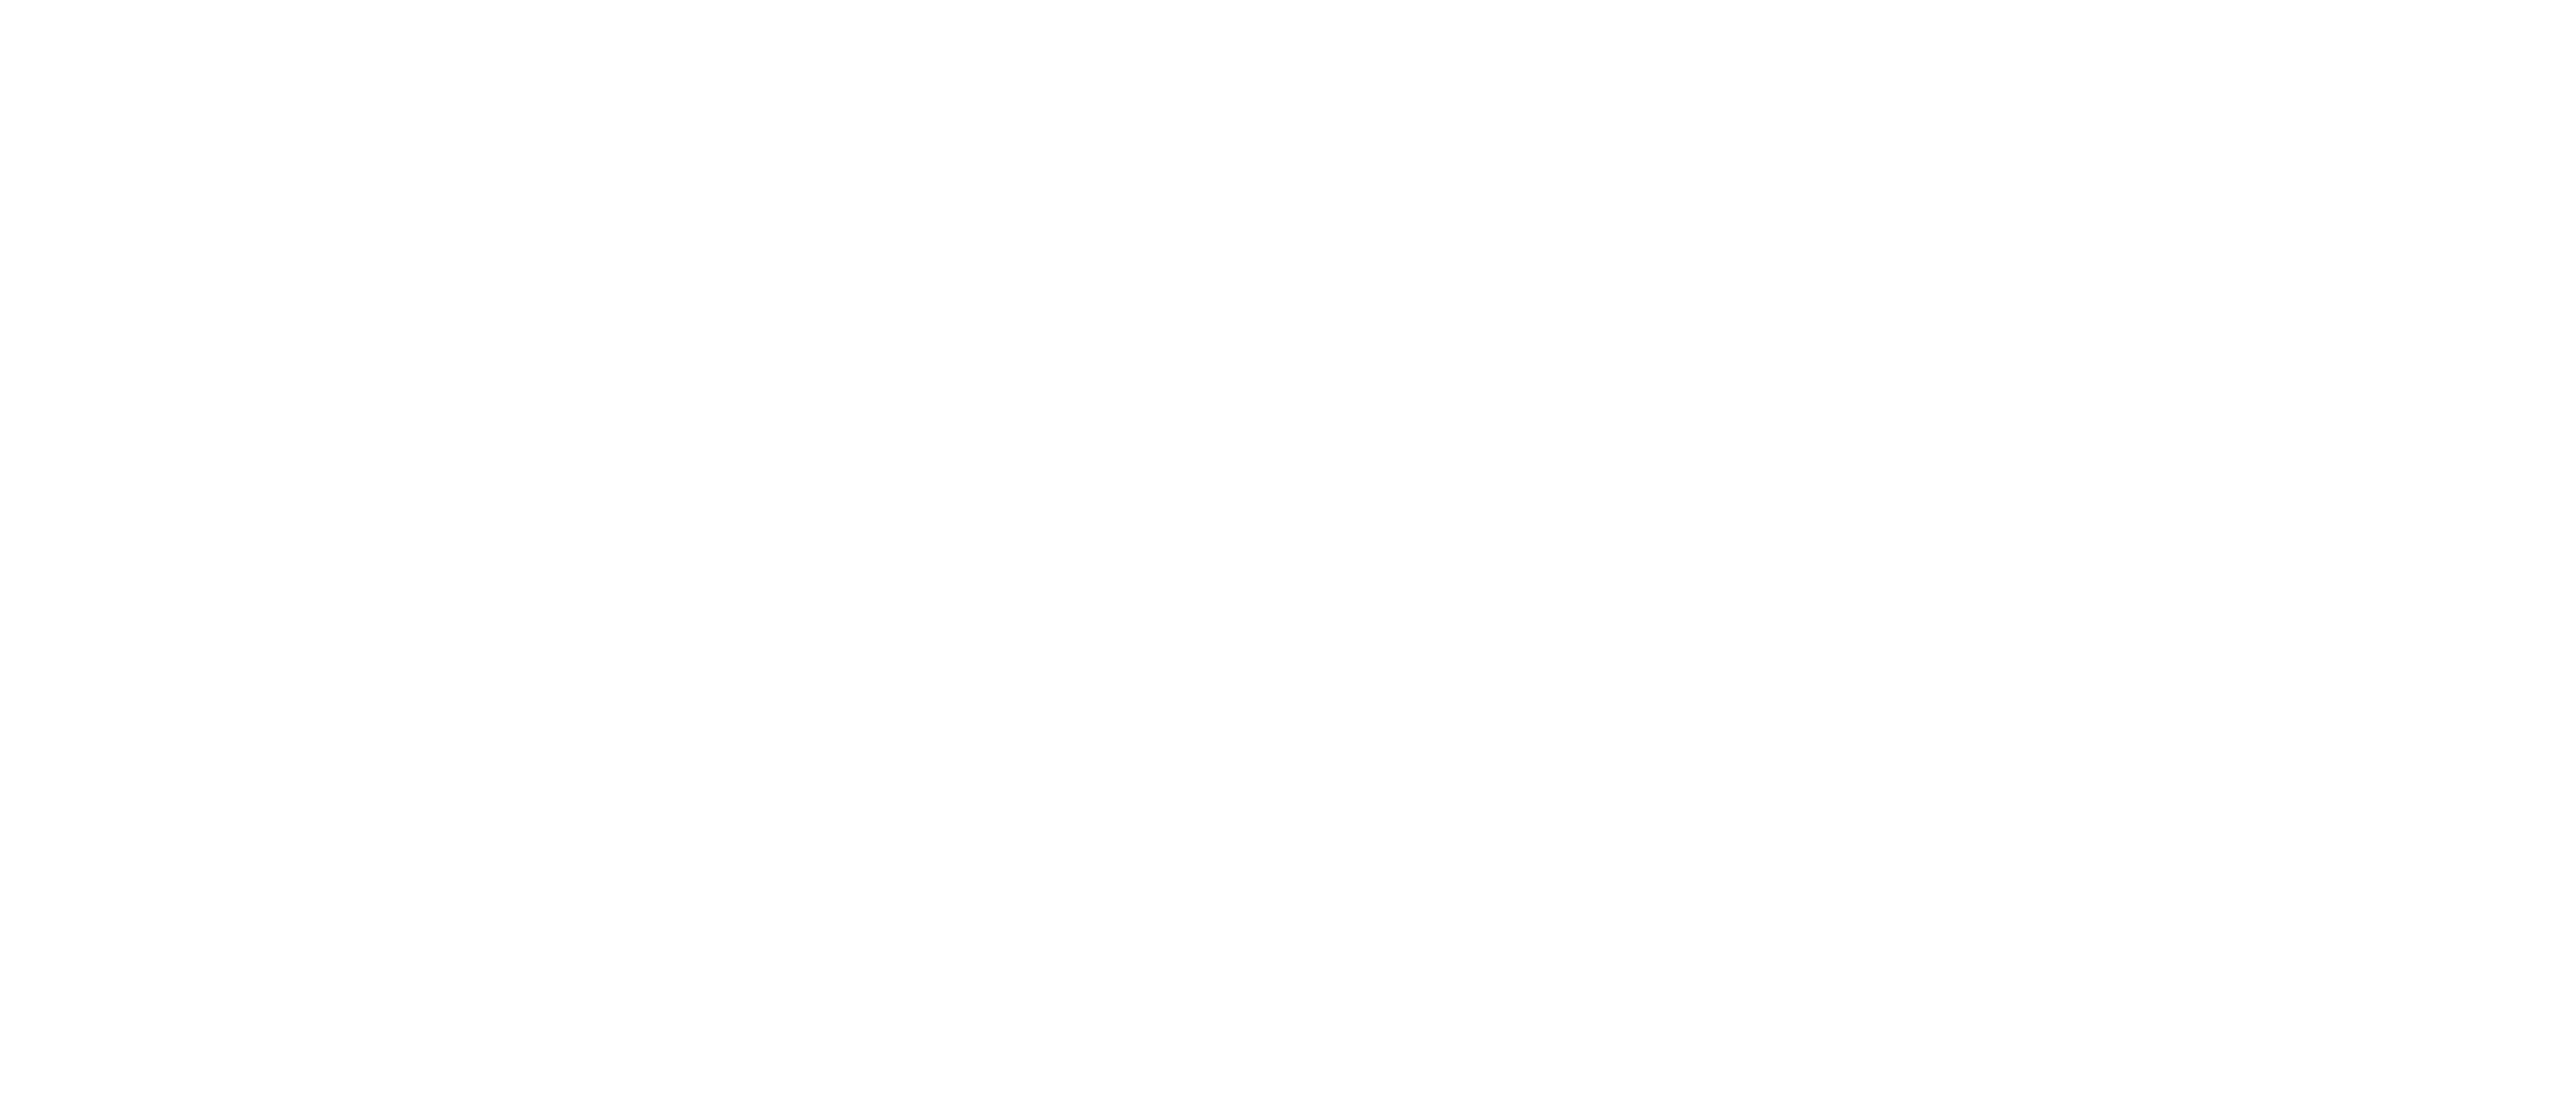 Device Logos 3